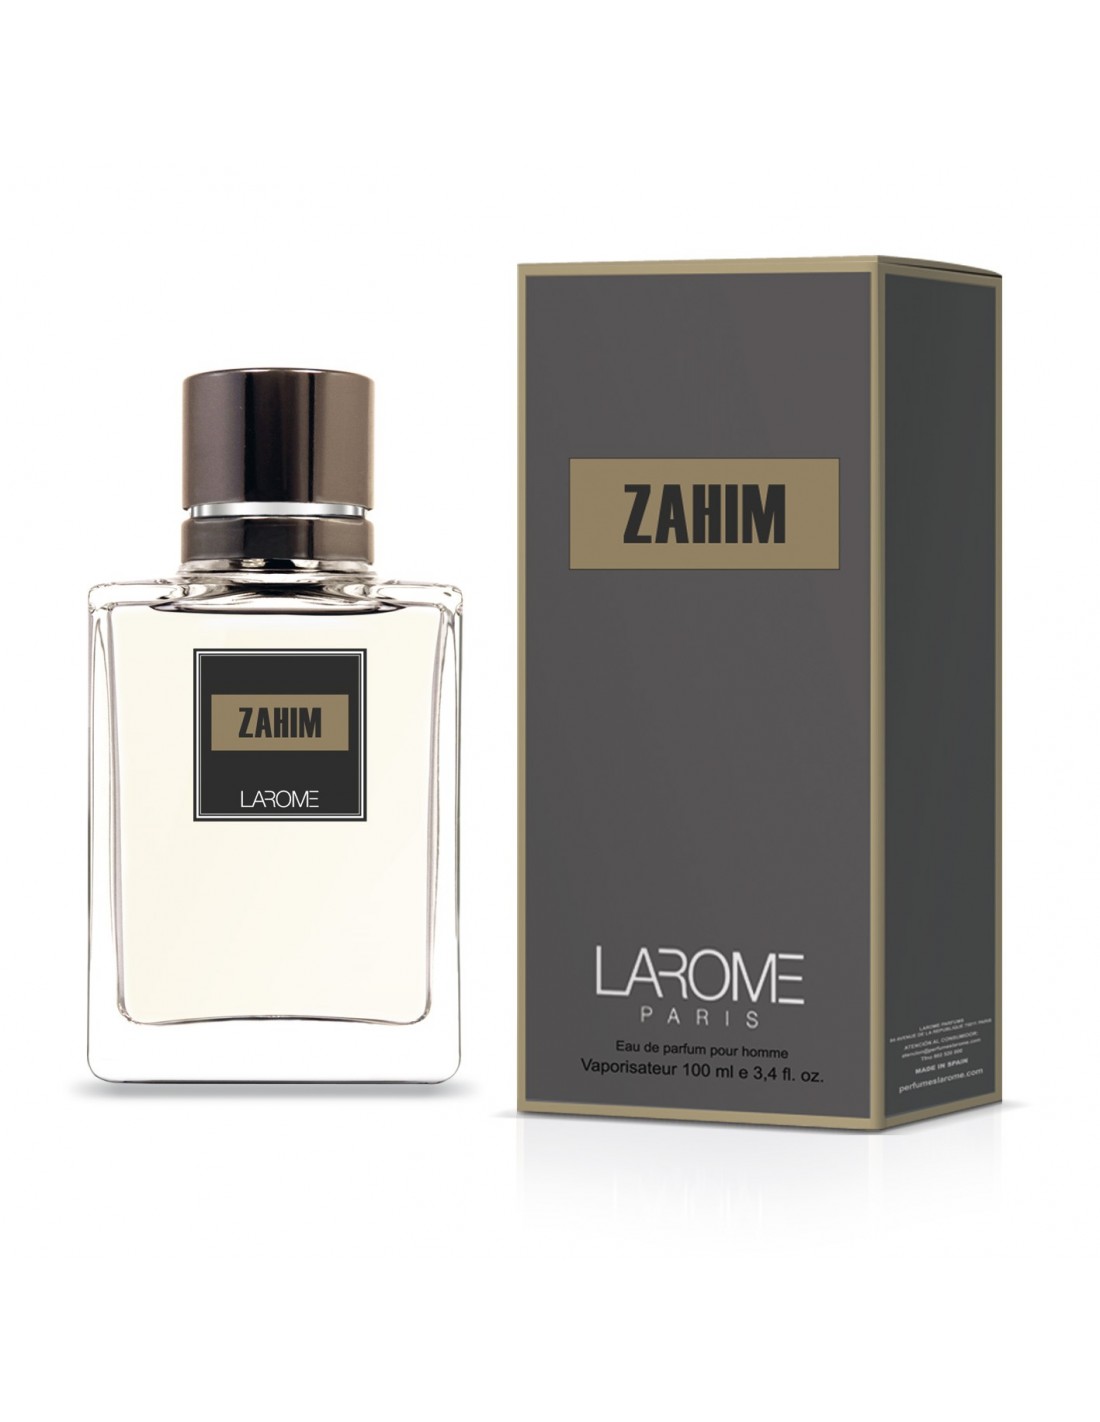 ZAHIM by LAROME Perfume for man Size 100ml